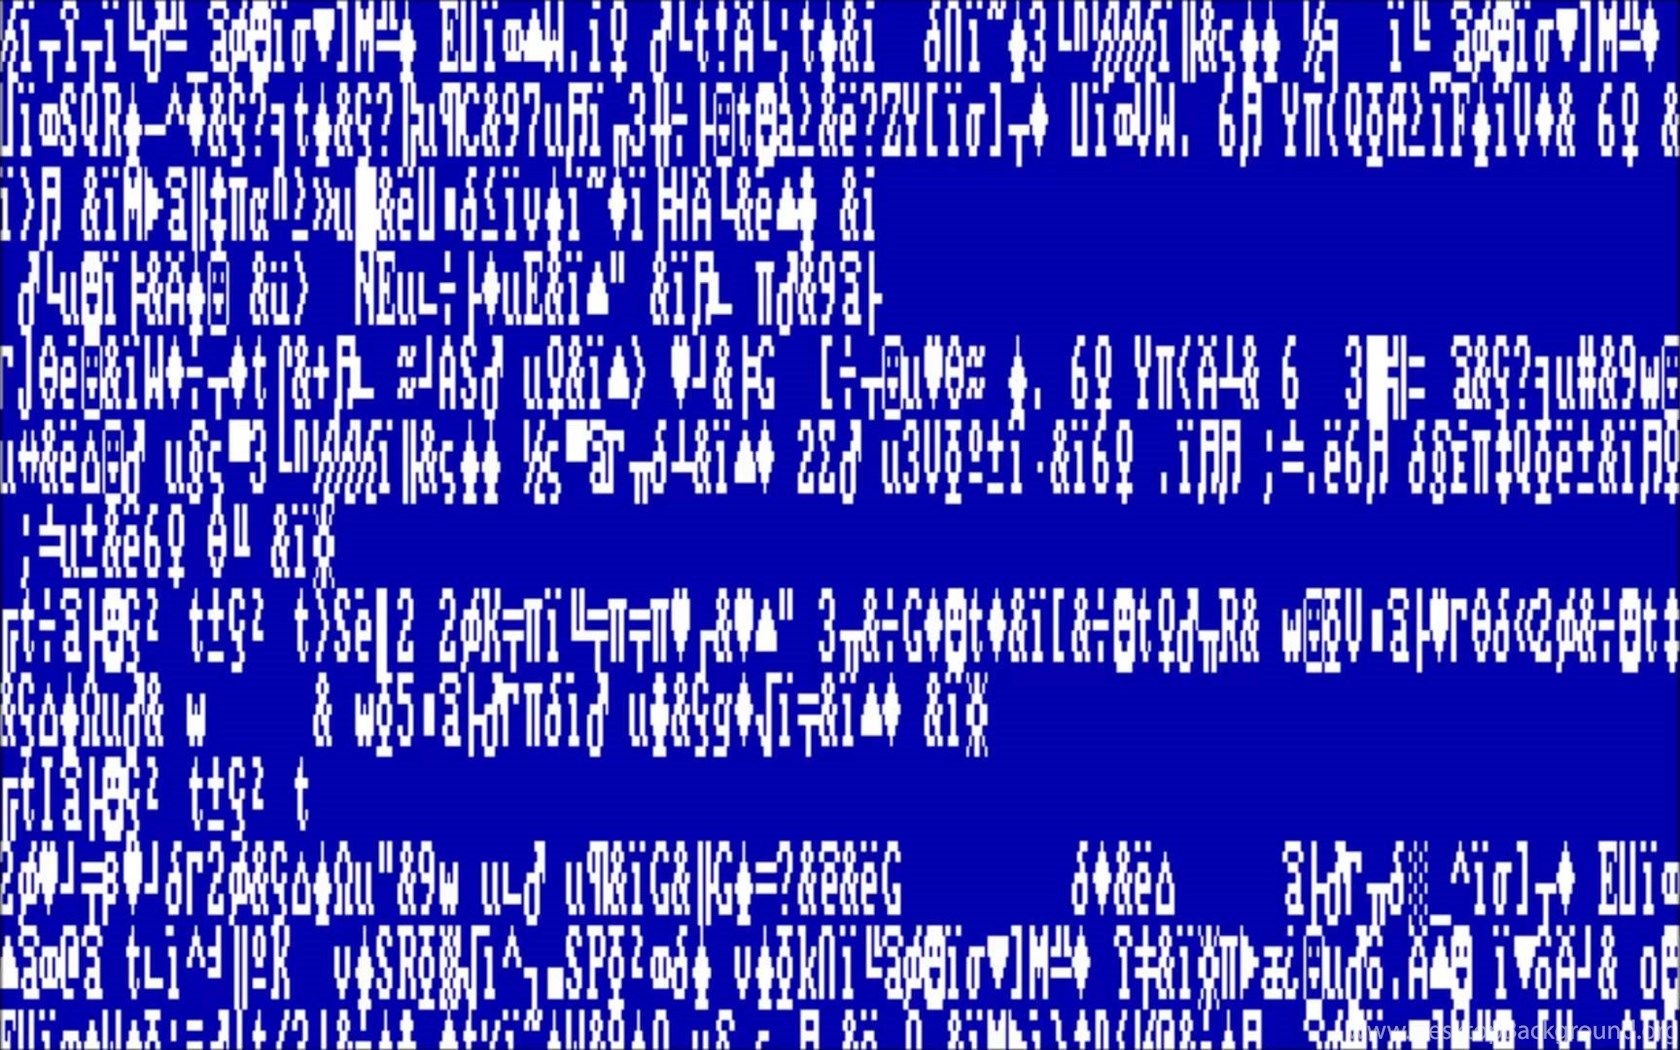 967988_windows-1-0-blue-screen-of-death-youtube_1920x1080_h.jpg